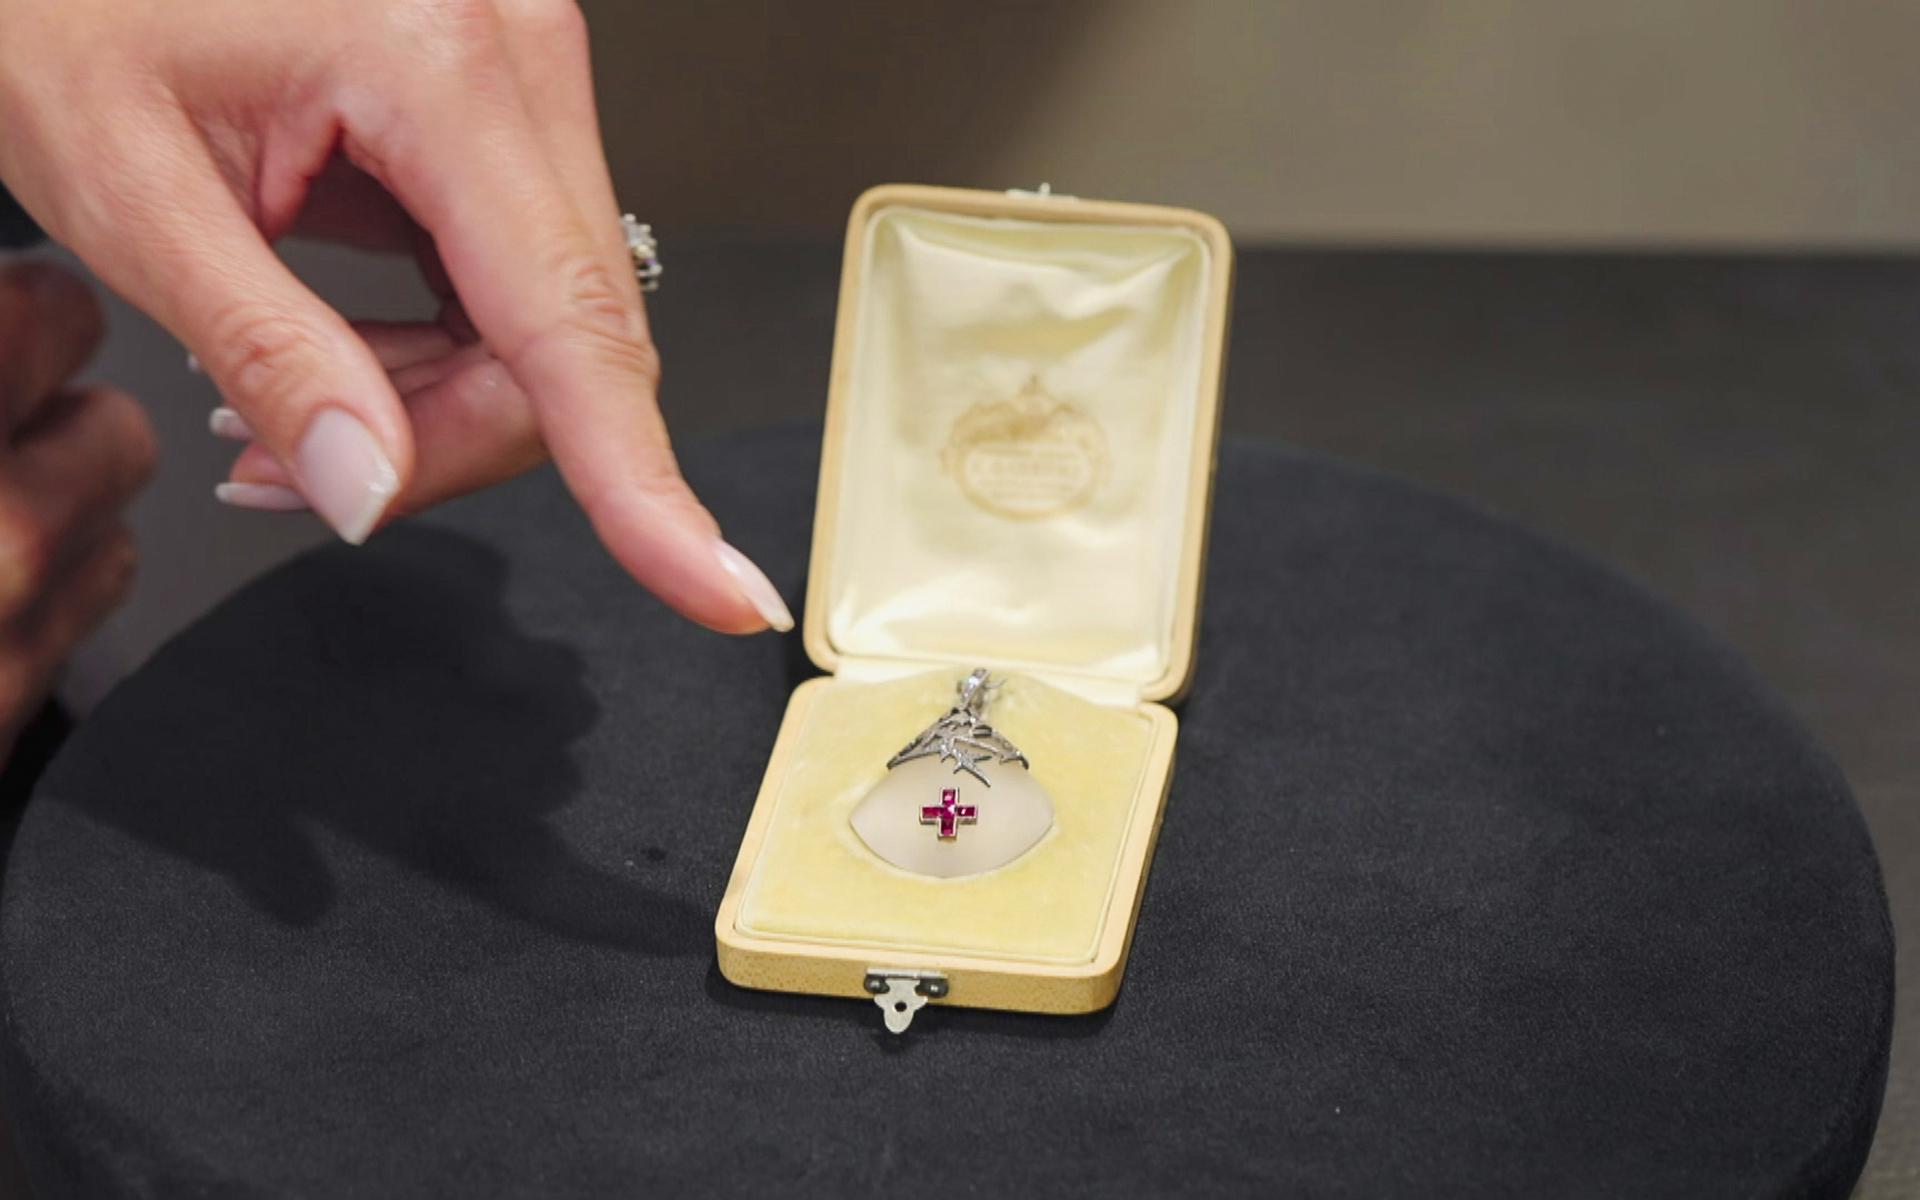 Smycket i Fabergé-asken väckte smyckesexpertens intresse. Kanske är det programmets höjdpunkt. Foto: SVT.